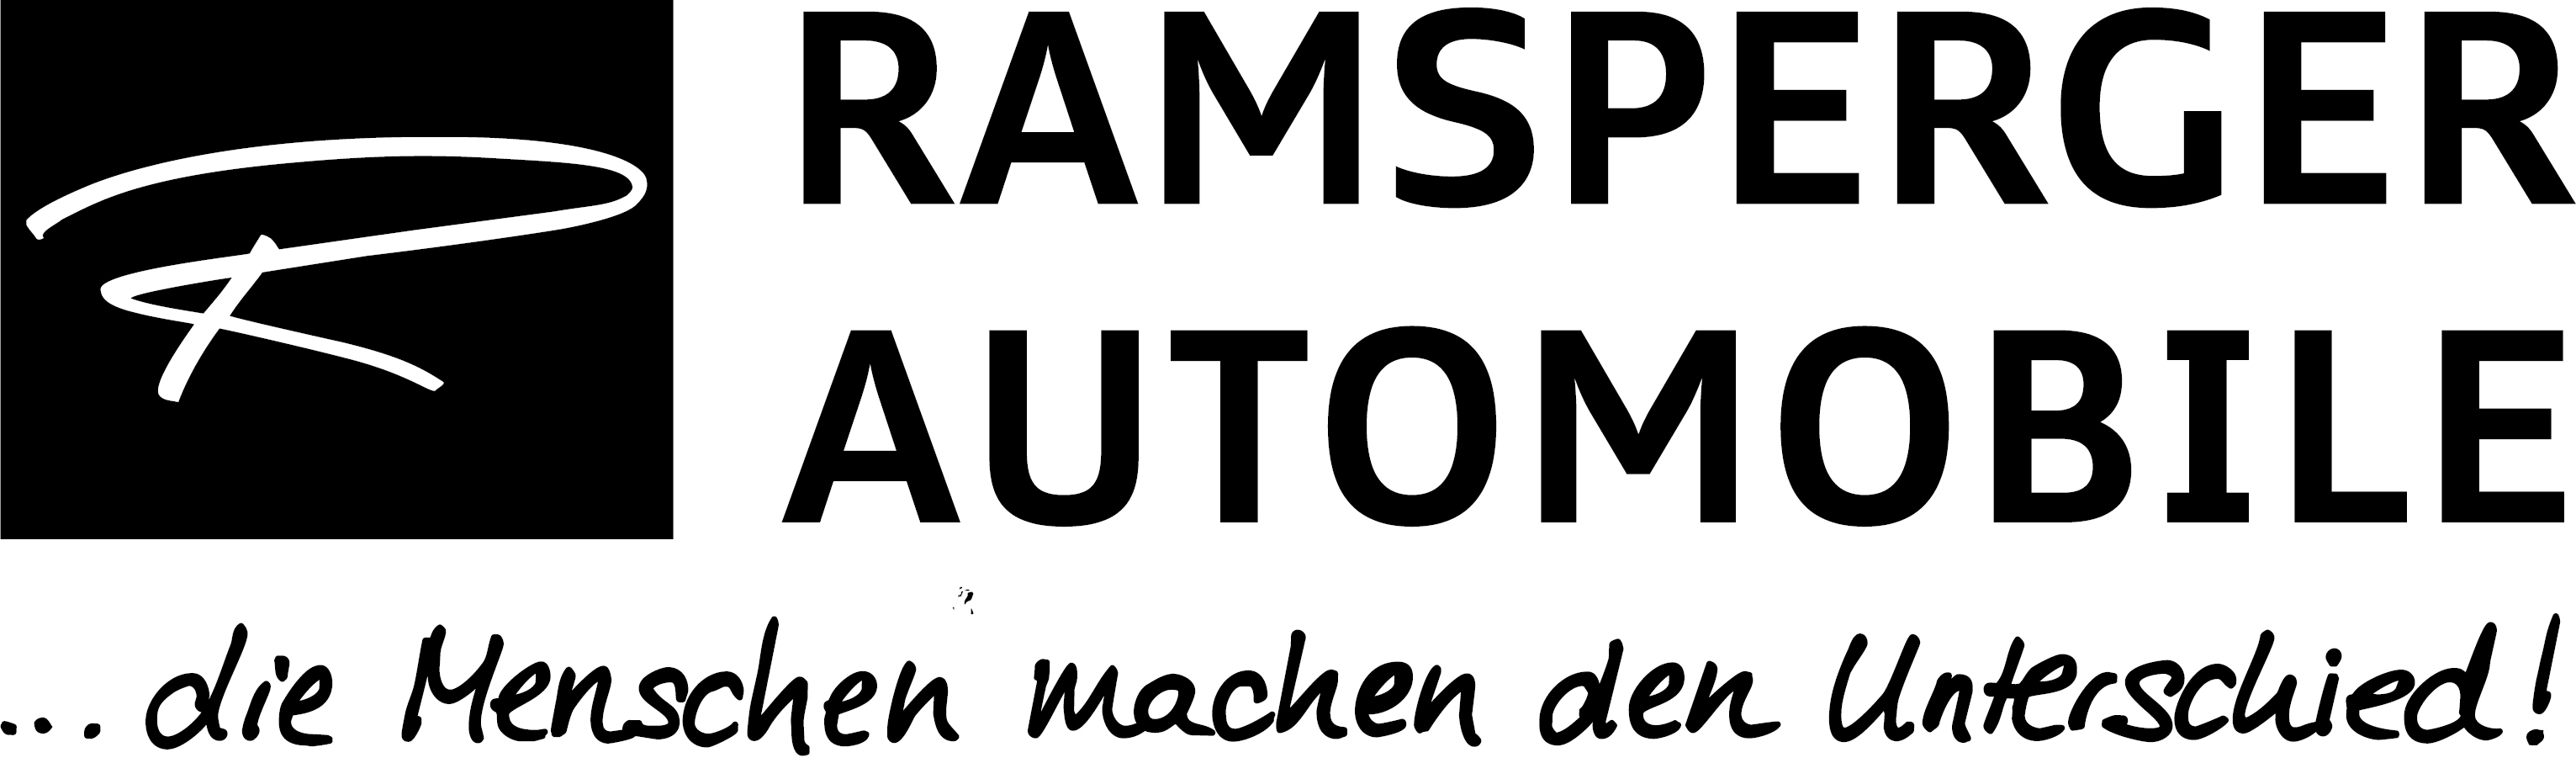 Ramsperger_Logo_links_sw_mit_Claim.jpg